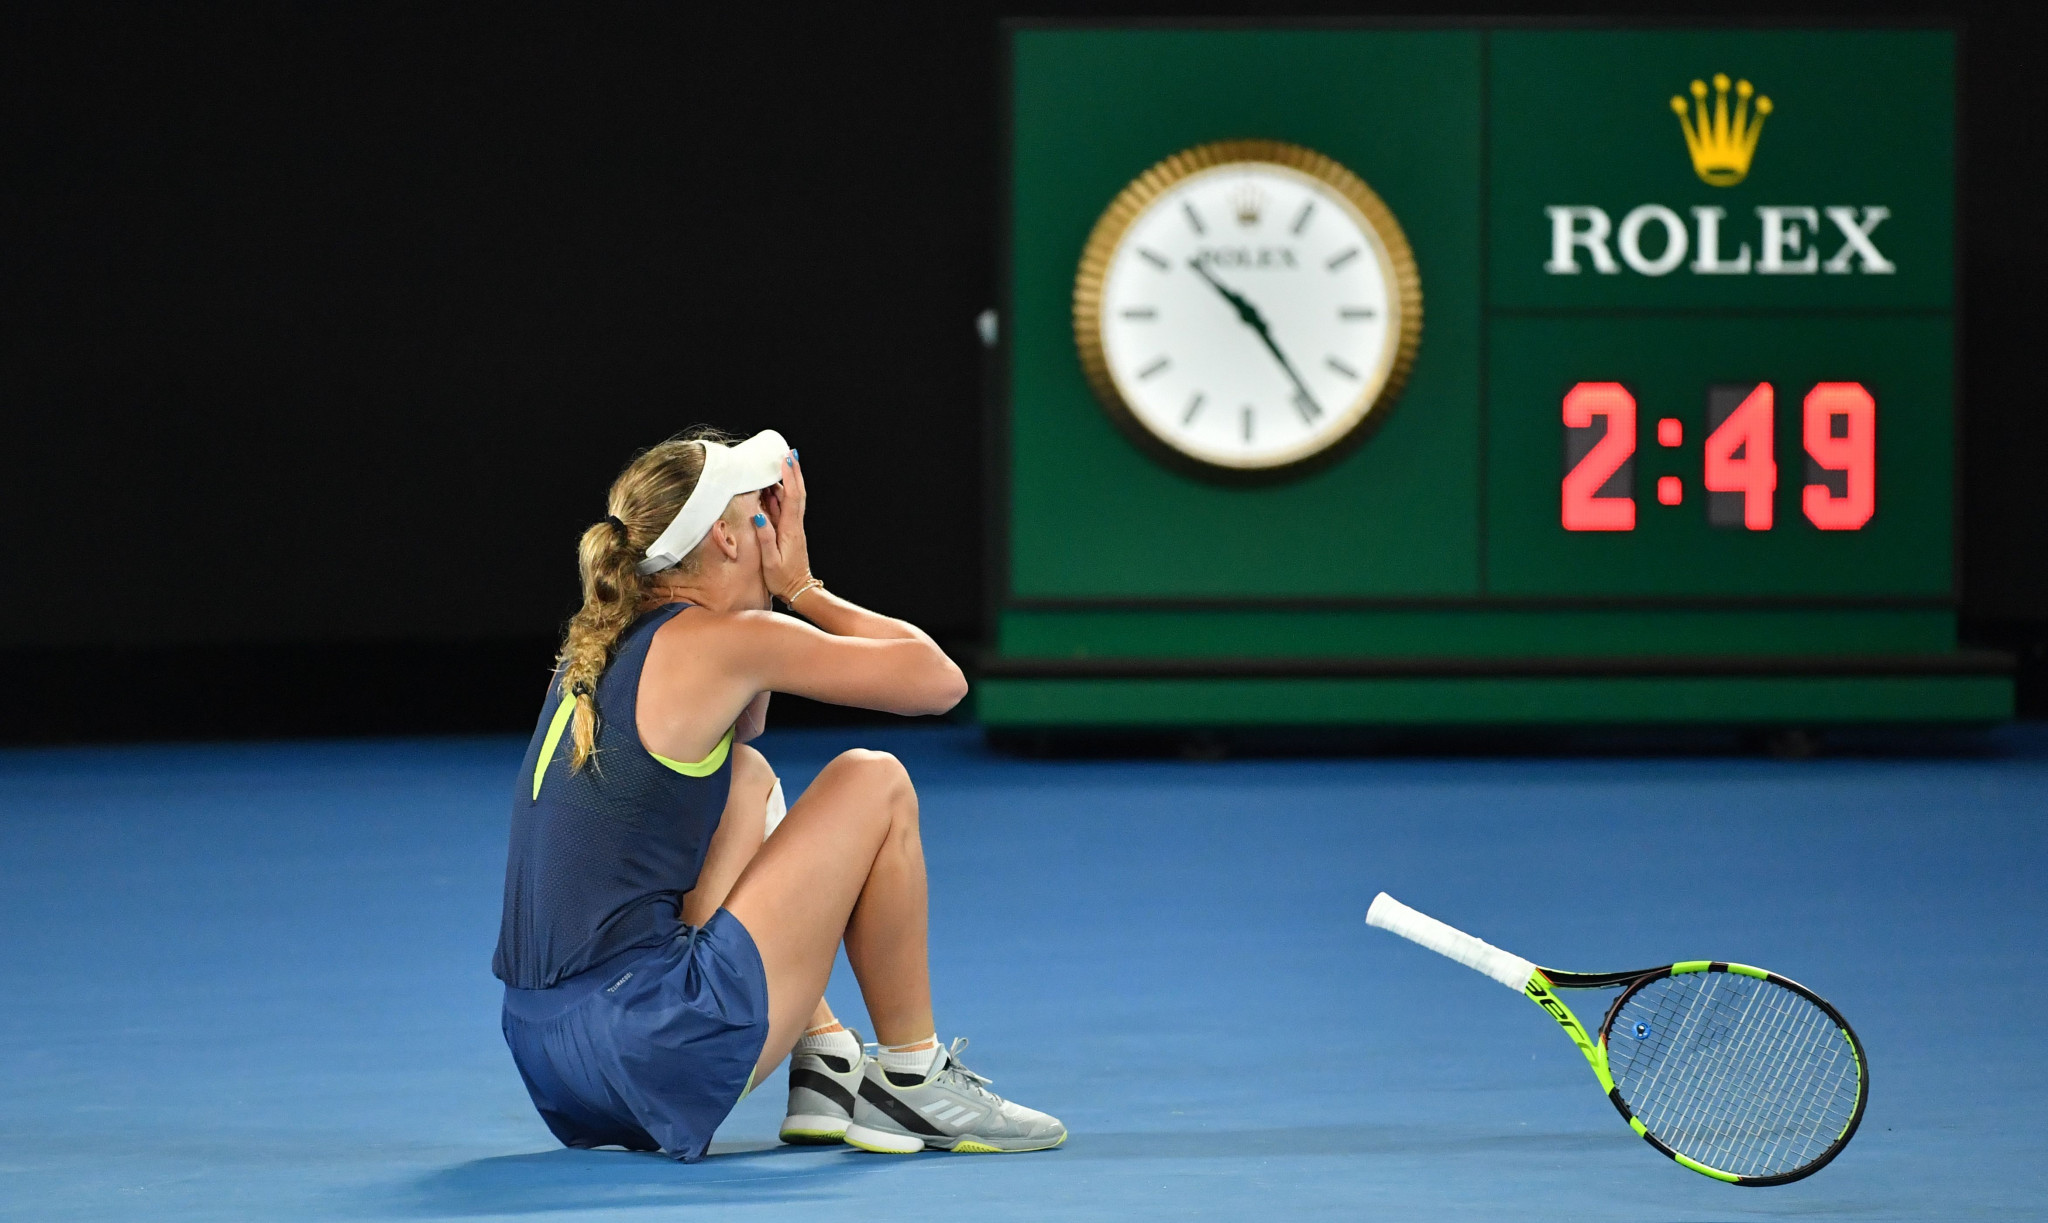 Simona Halep made an error on match point to hand Caroline Wozniacki the title ©Getty Images